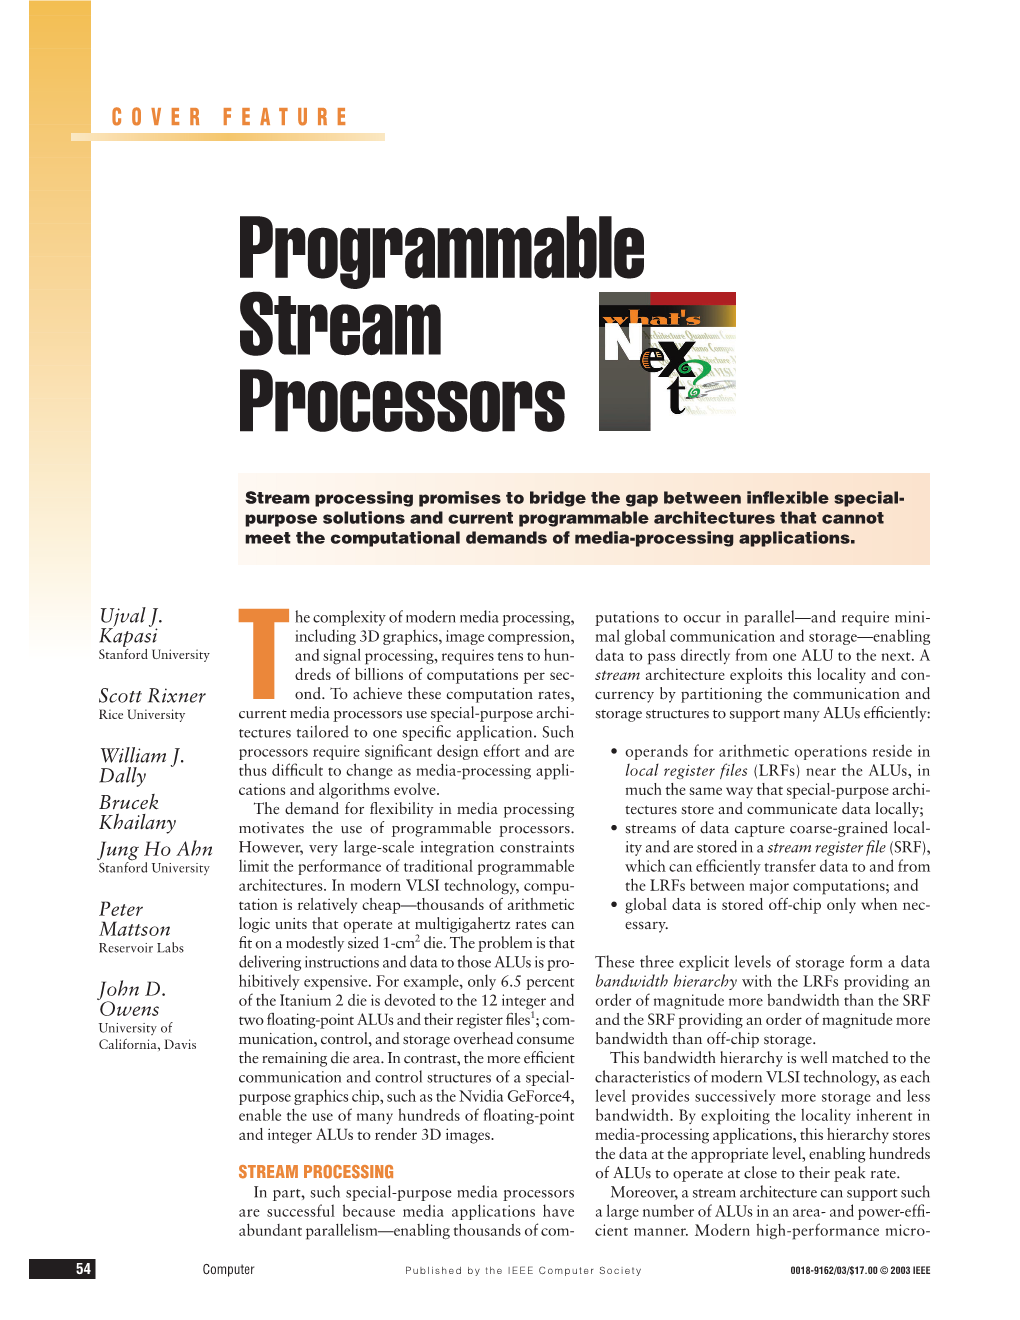 Programmable Stream Processors